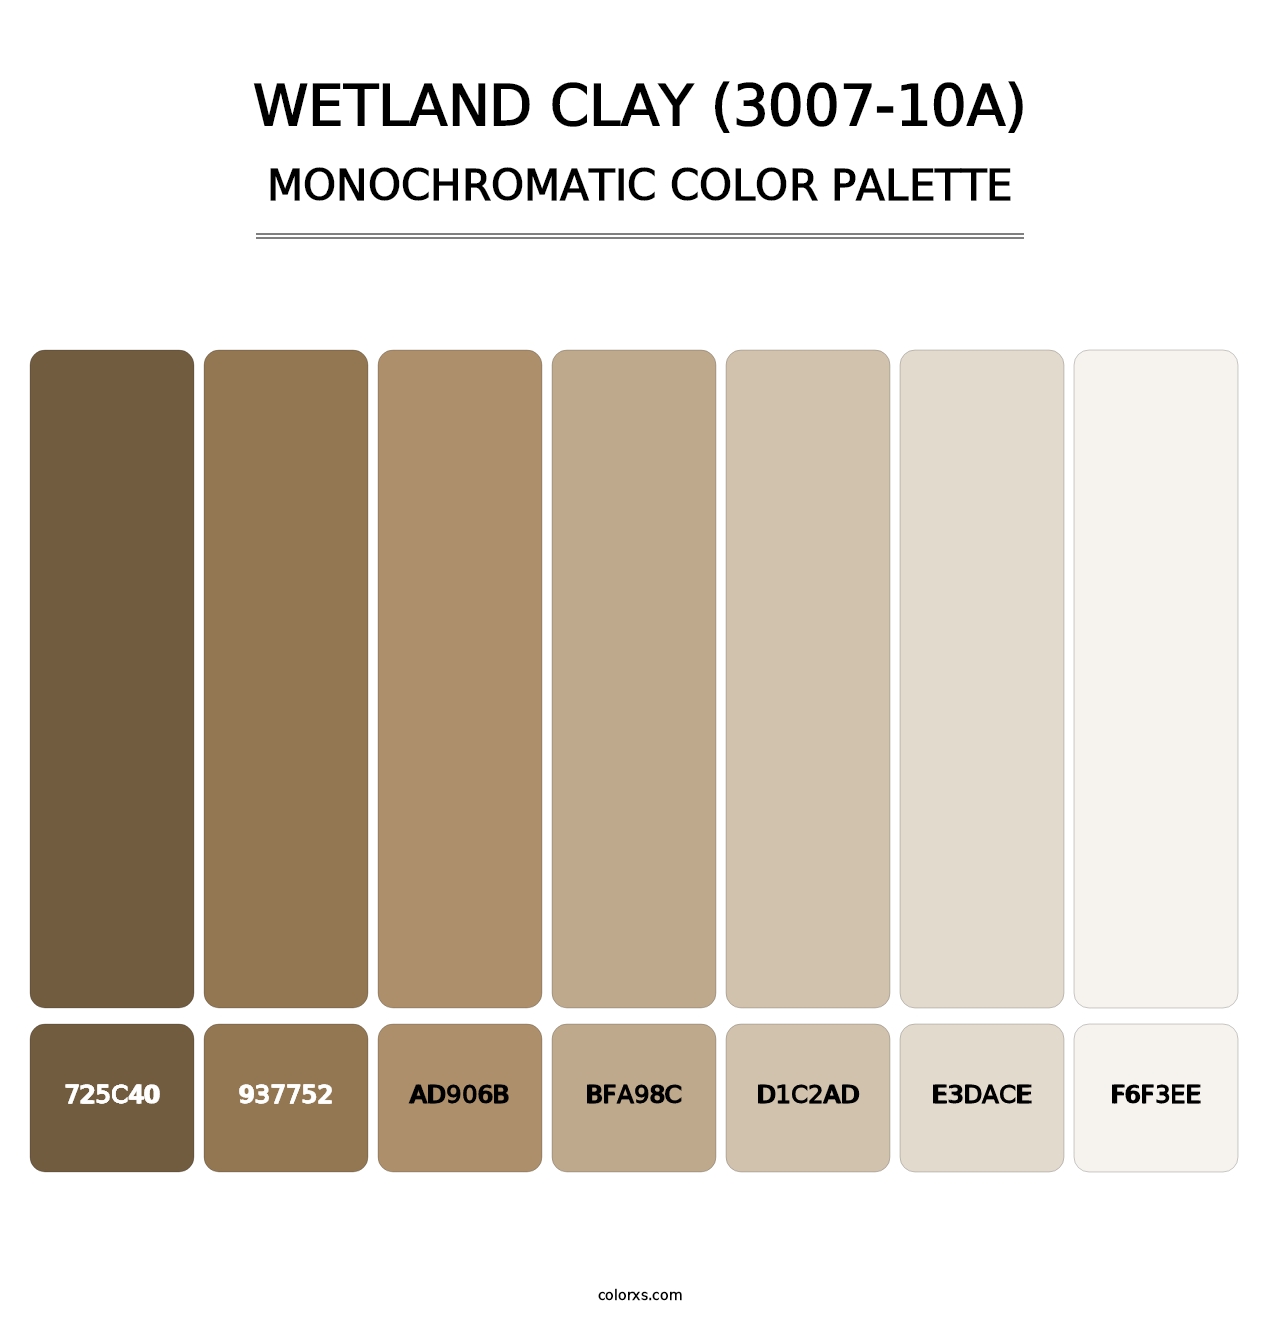 Wetland Clay (3007-10A) - Monochromatic Color Palette